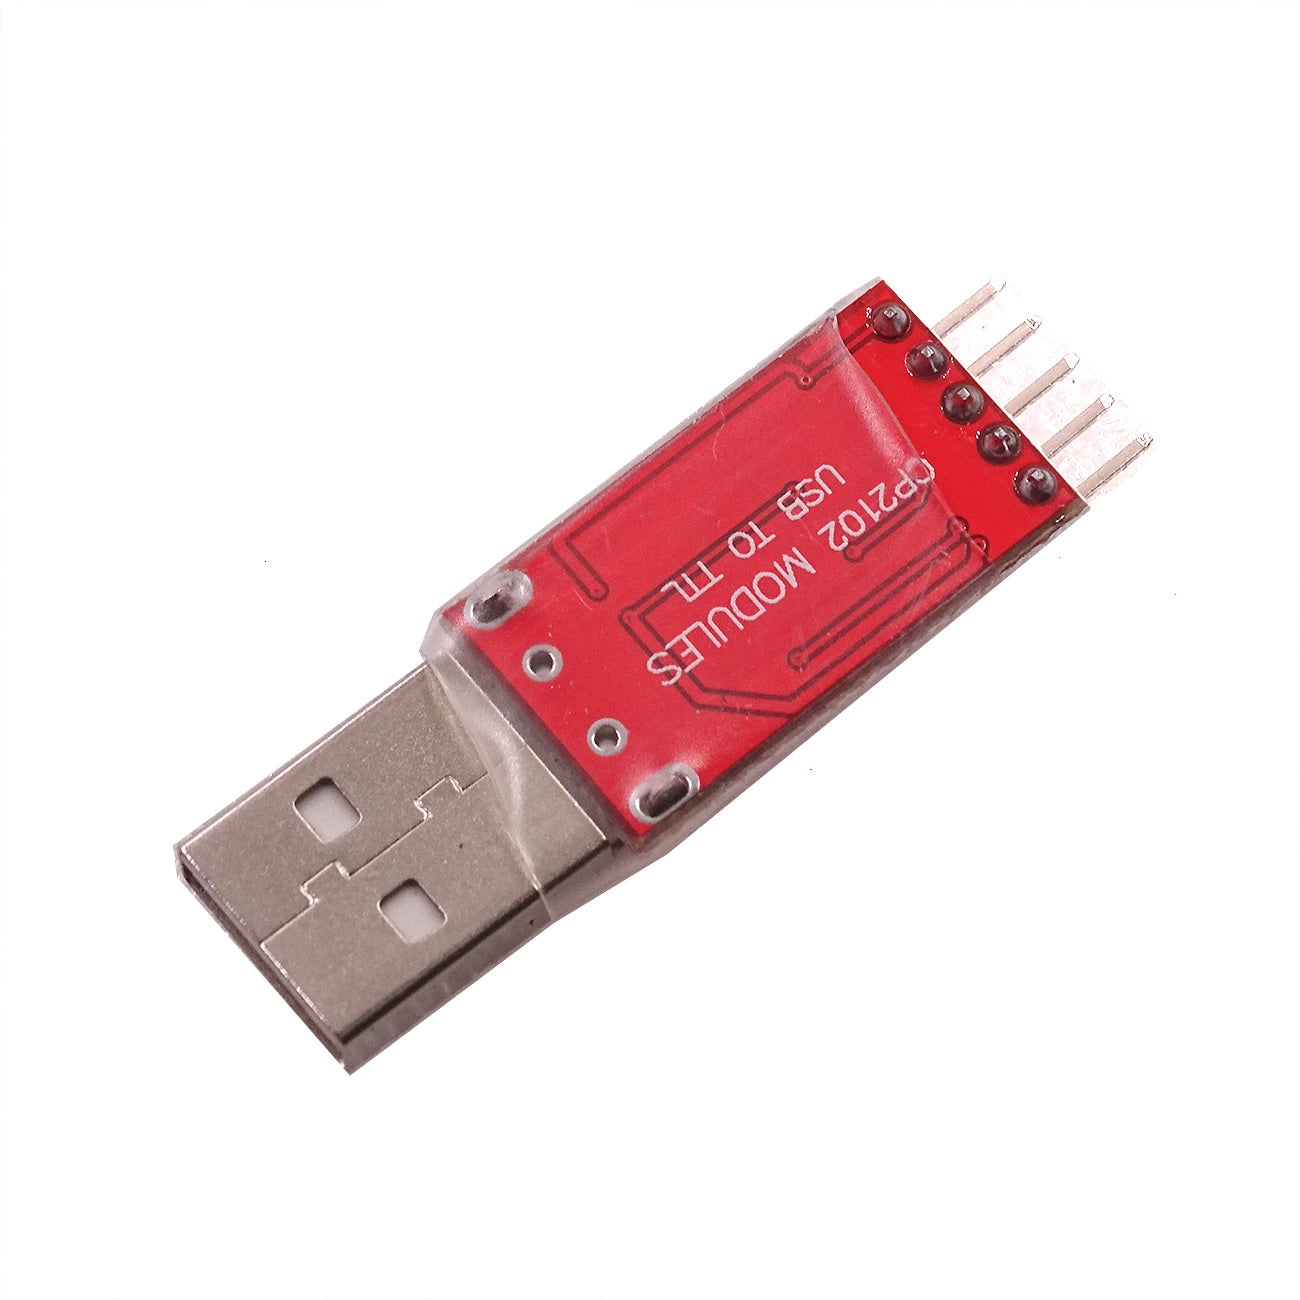 CP2102 5Pin USB to TTL UART Serial Converter Module